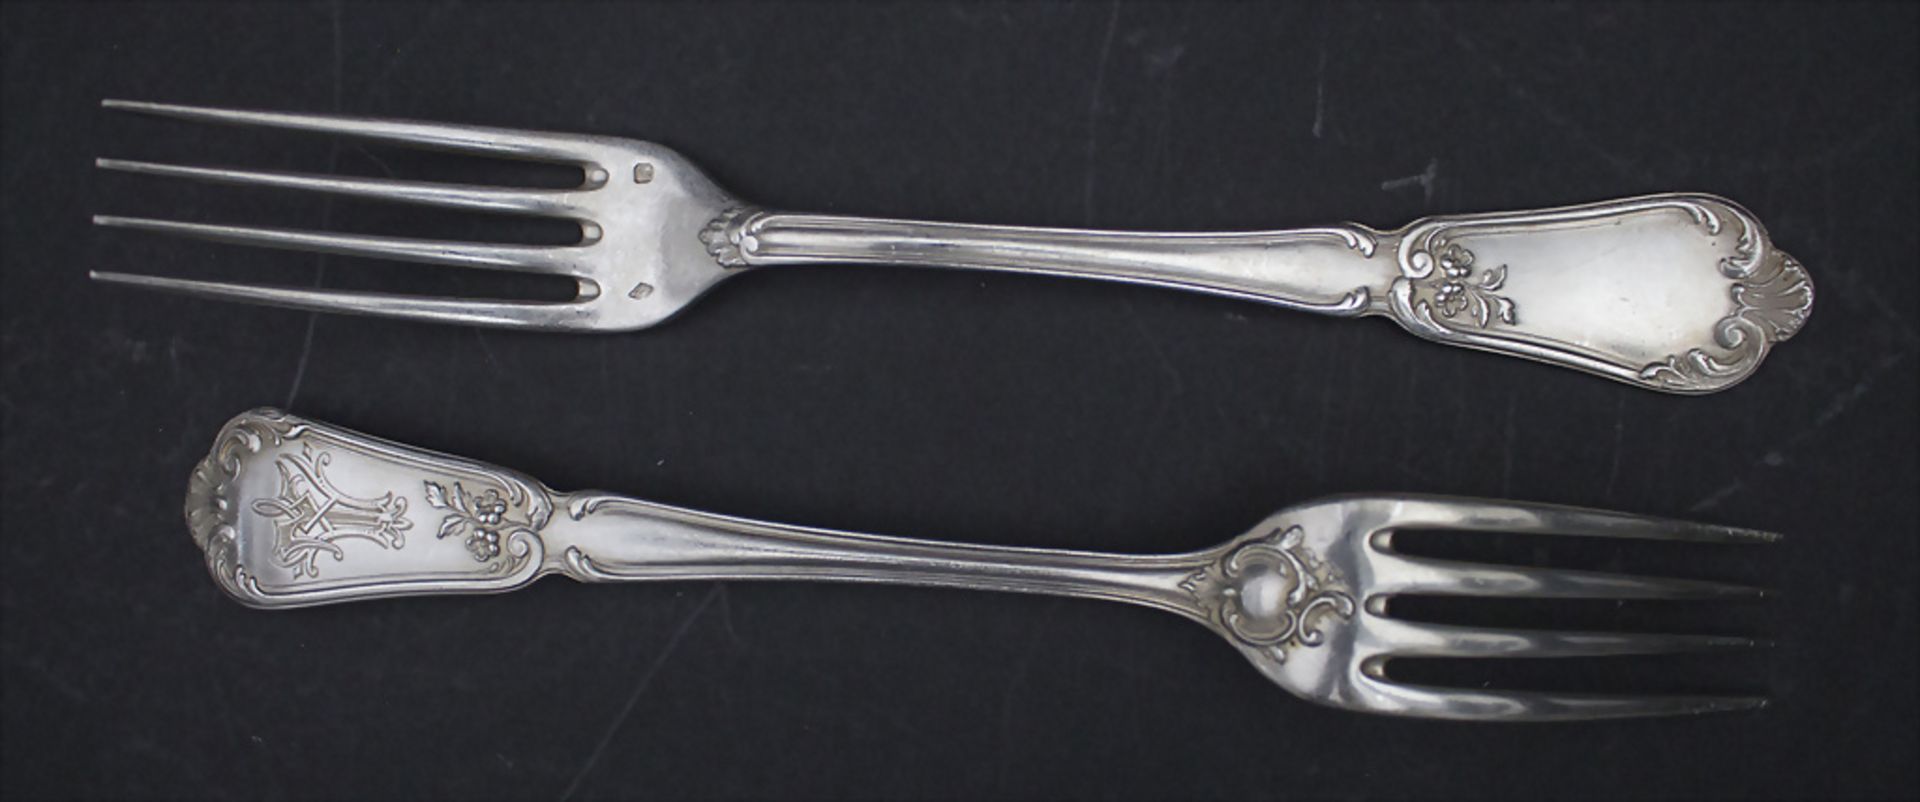 36 tlg. Besteck / A 36-piece set of silver cutlery, Hènin & Cie, Paris, um 1870 - Bild 3 aus 8